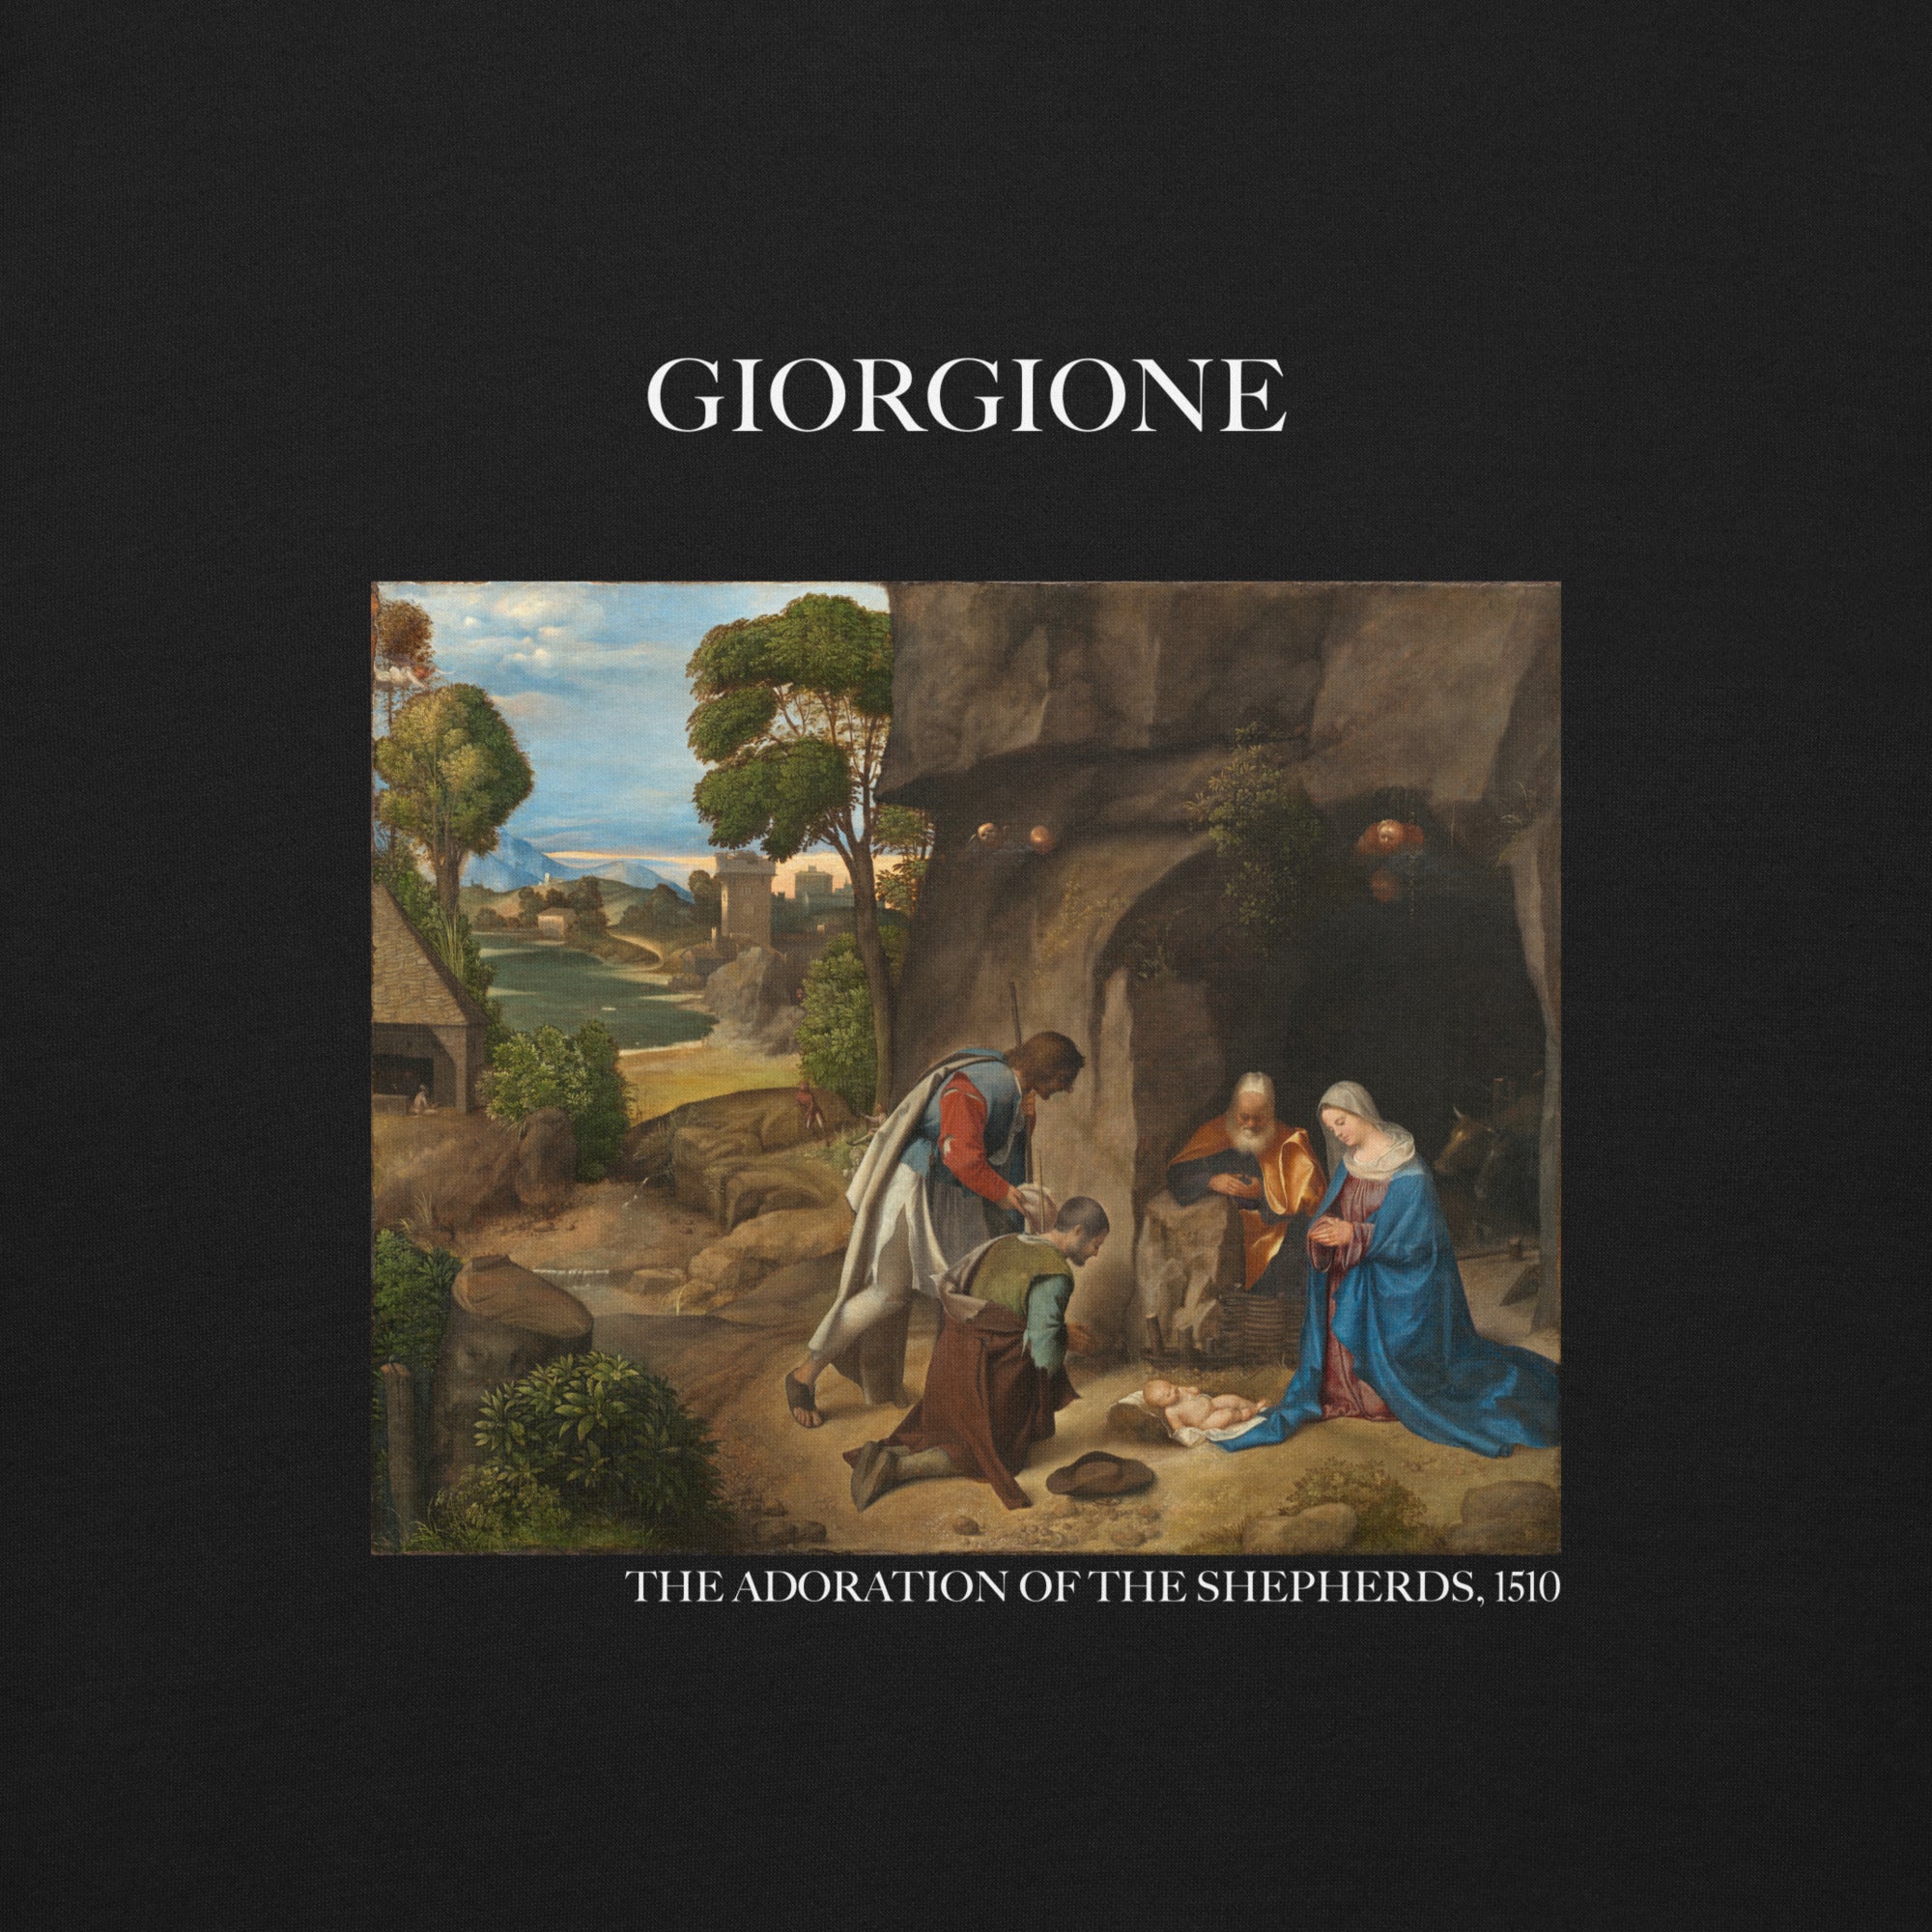 Giorgione 'The Adoration of the Shepherds' Famous Painting Sweatshirt | Unisex Premium Sweatshirt